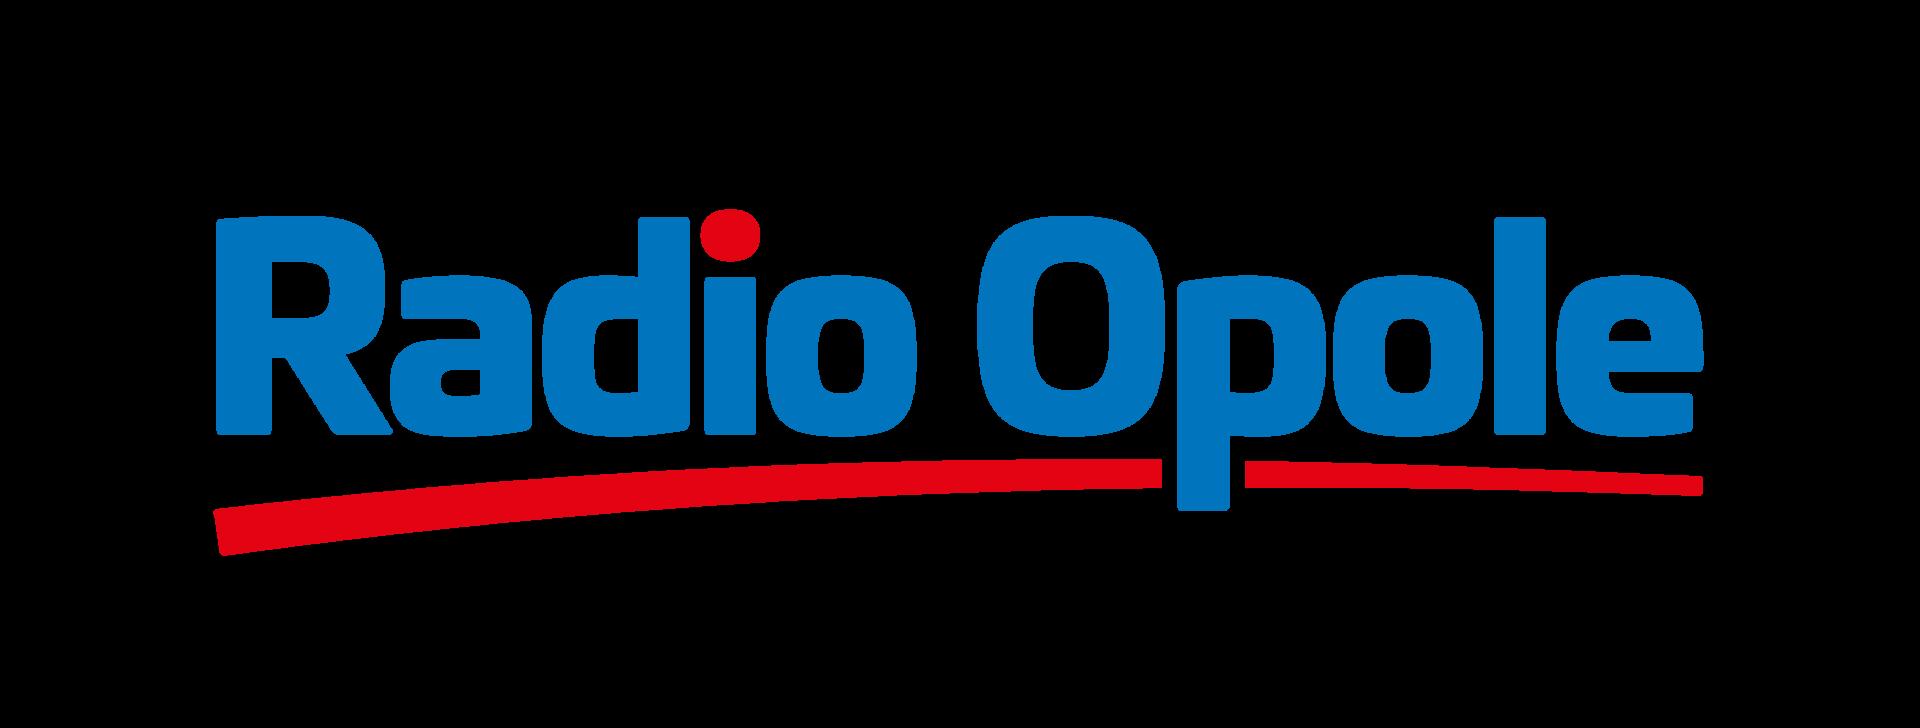 radio opole logo 2018 v2 RGB.png